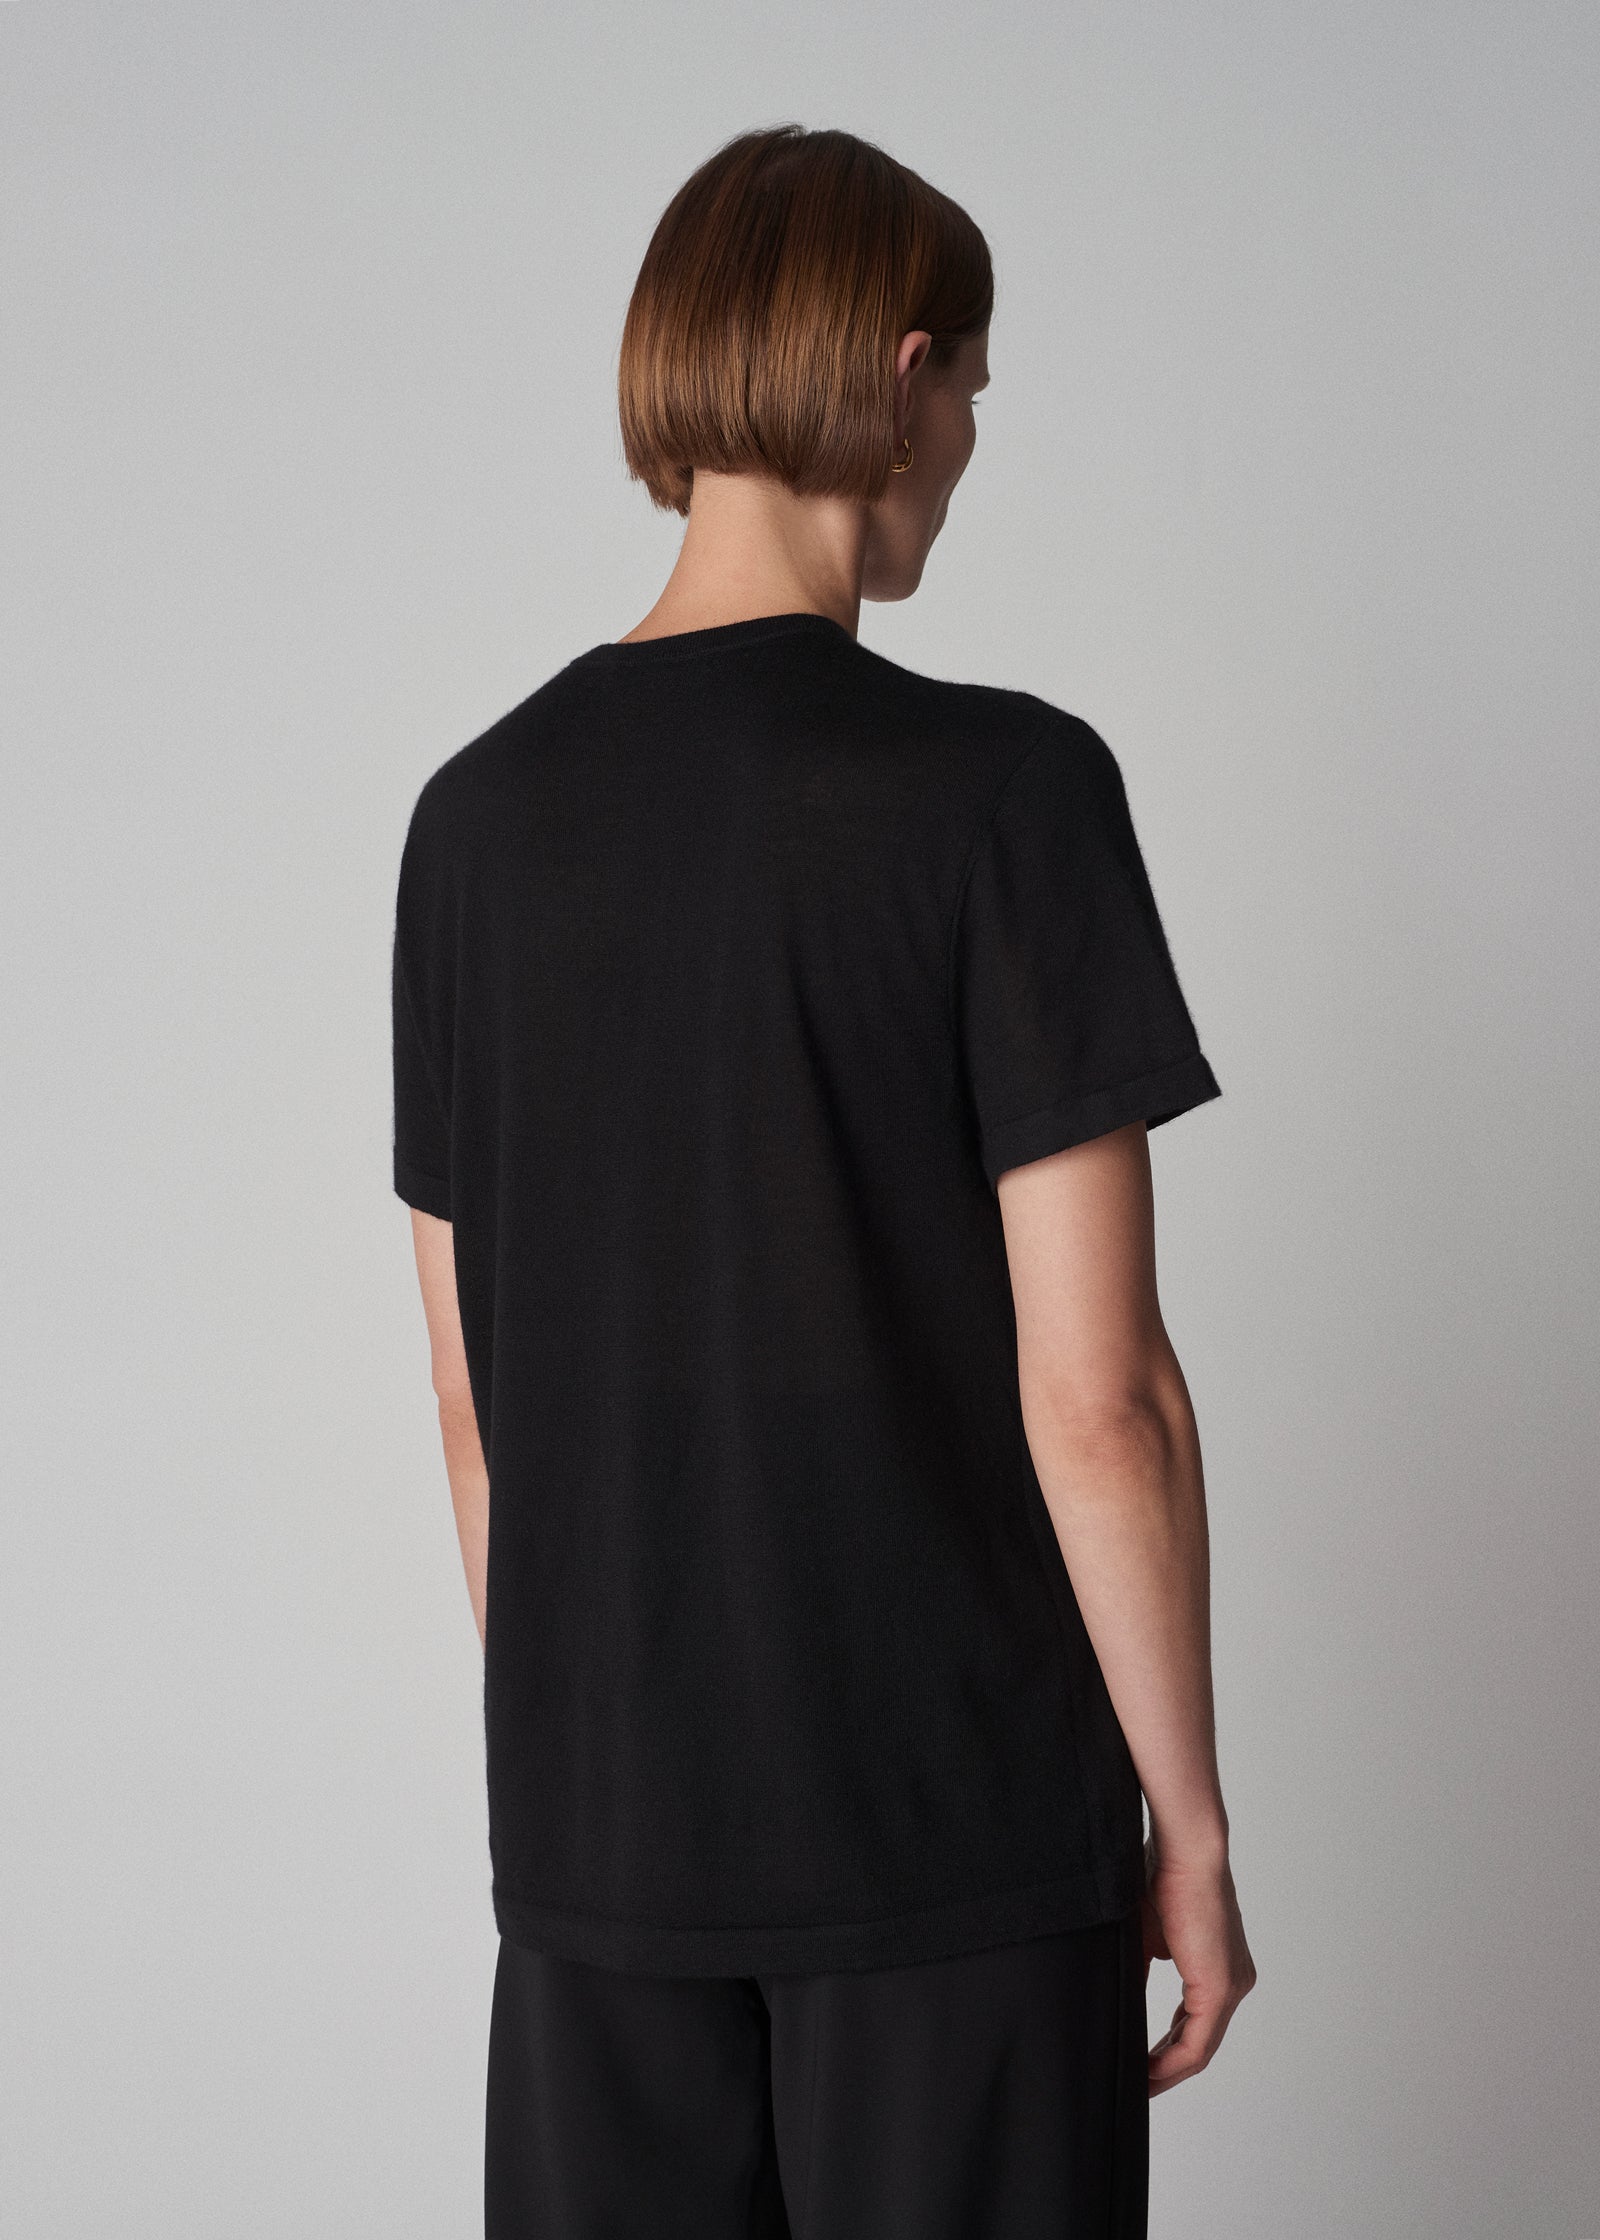 T-Shirt Cashmere Black | - Fine CO in